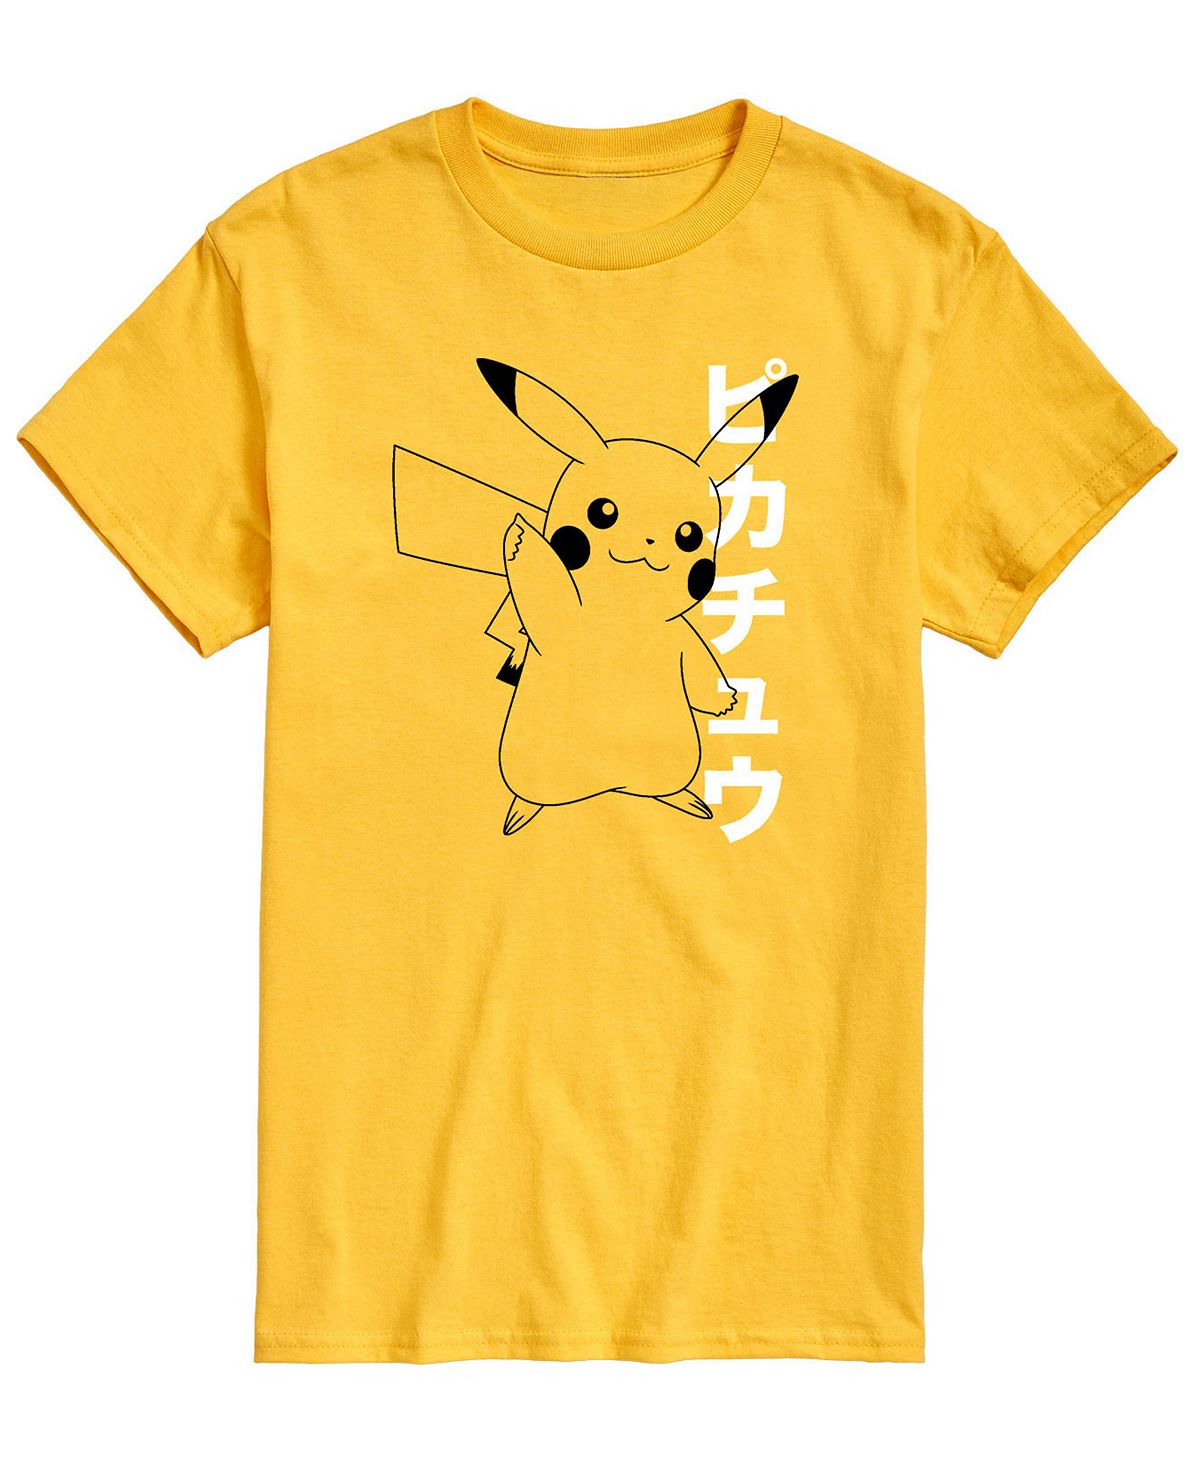 Мужская футболка с рисунком pokemon pika kanji AIRWAVES мужская футболка с длинным рукавом pokemon pika pika pika airwaves черный